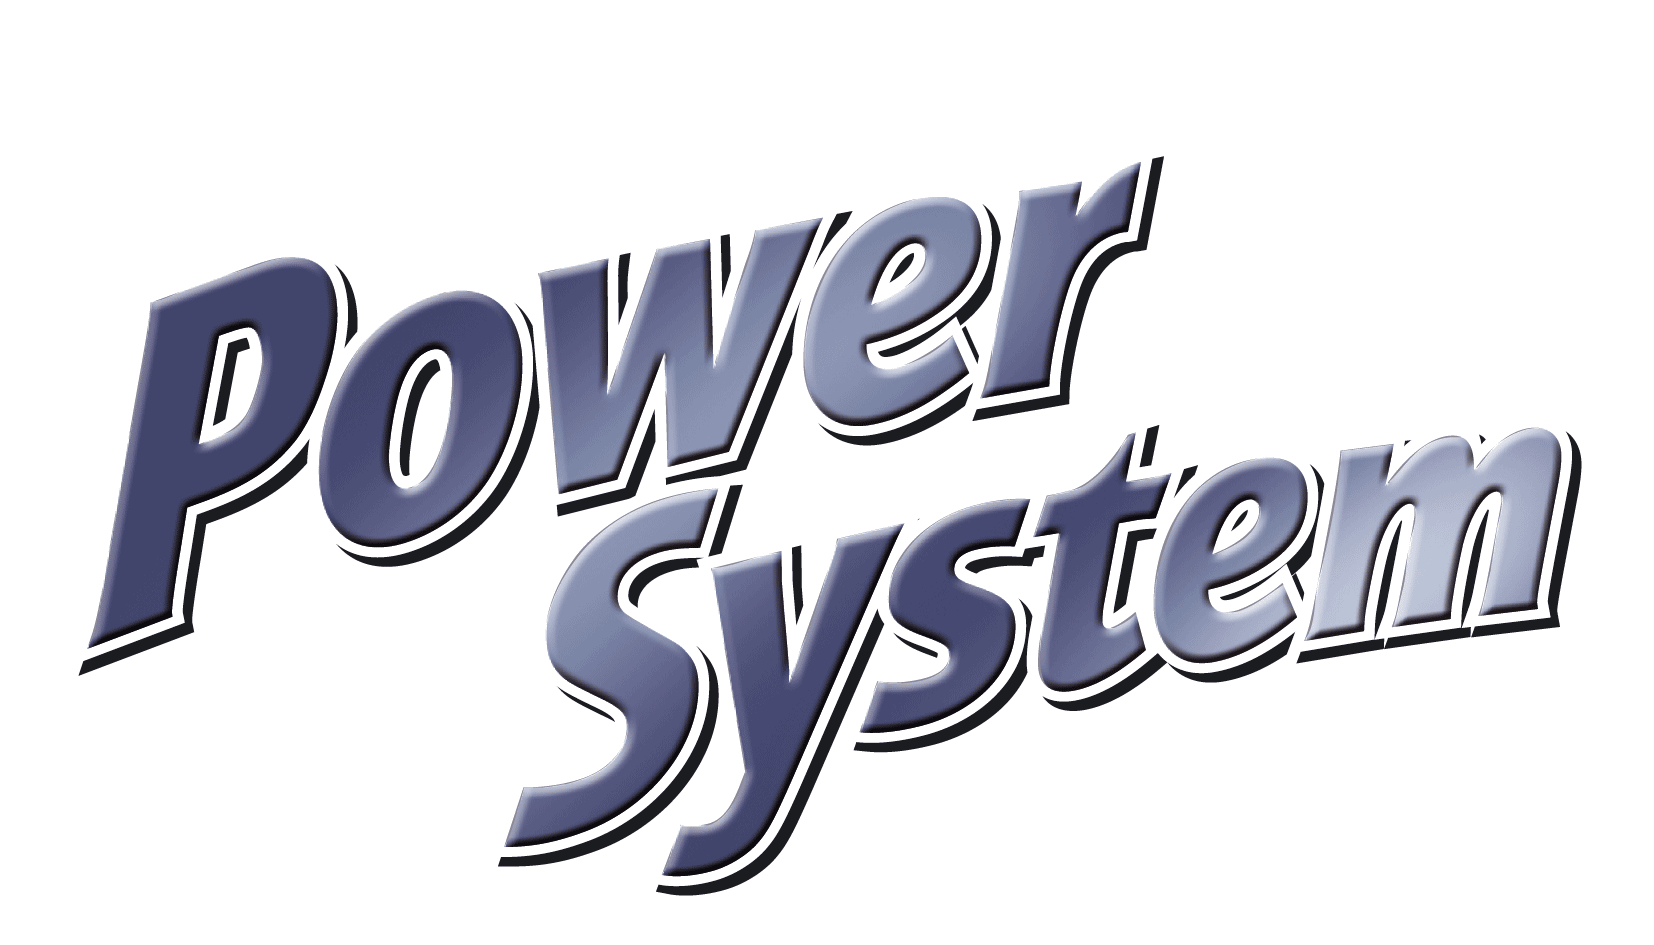 PowerSystem